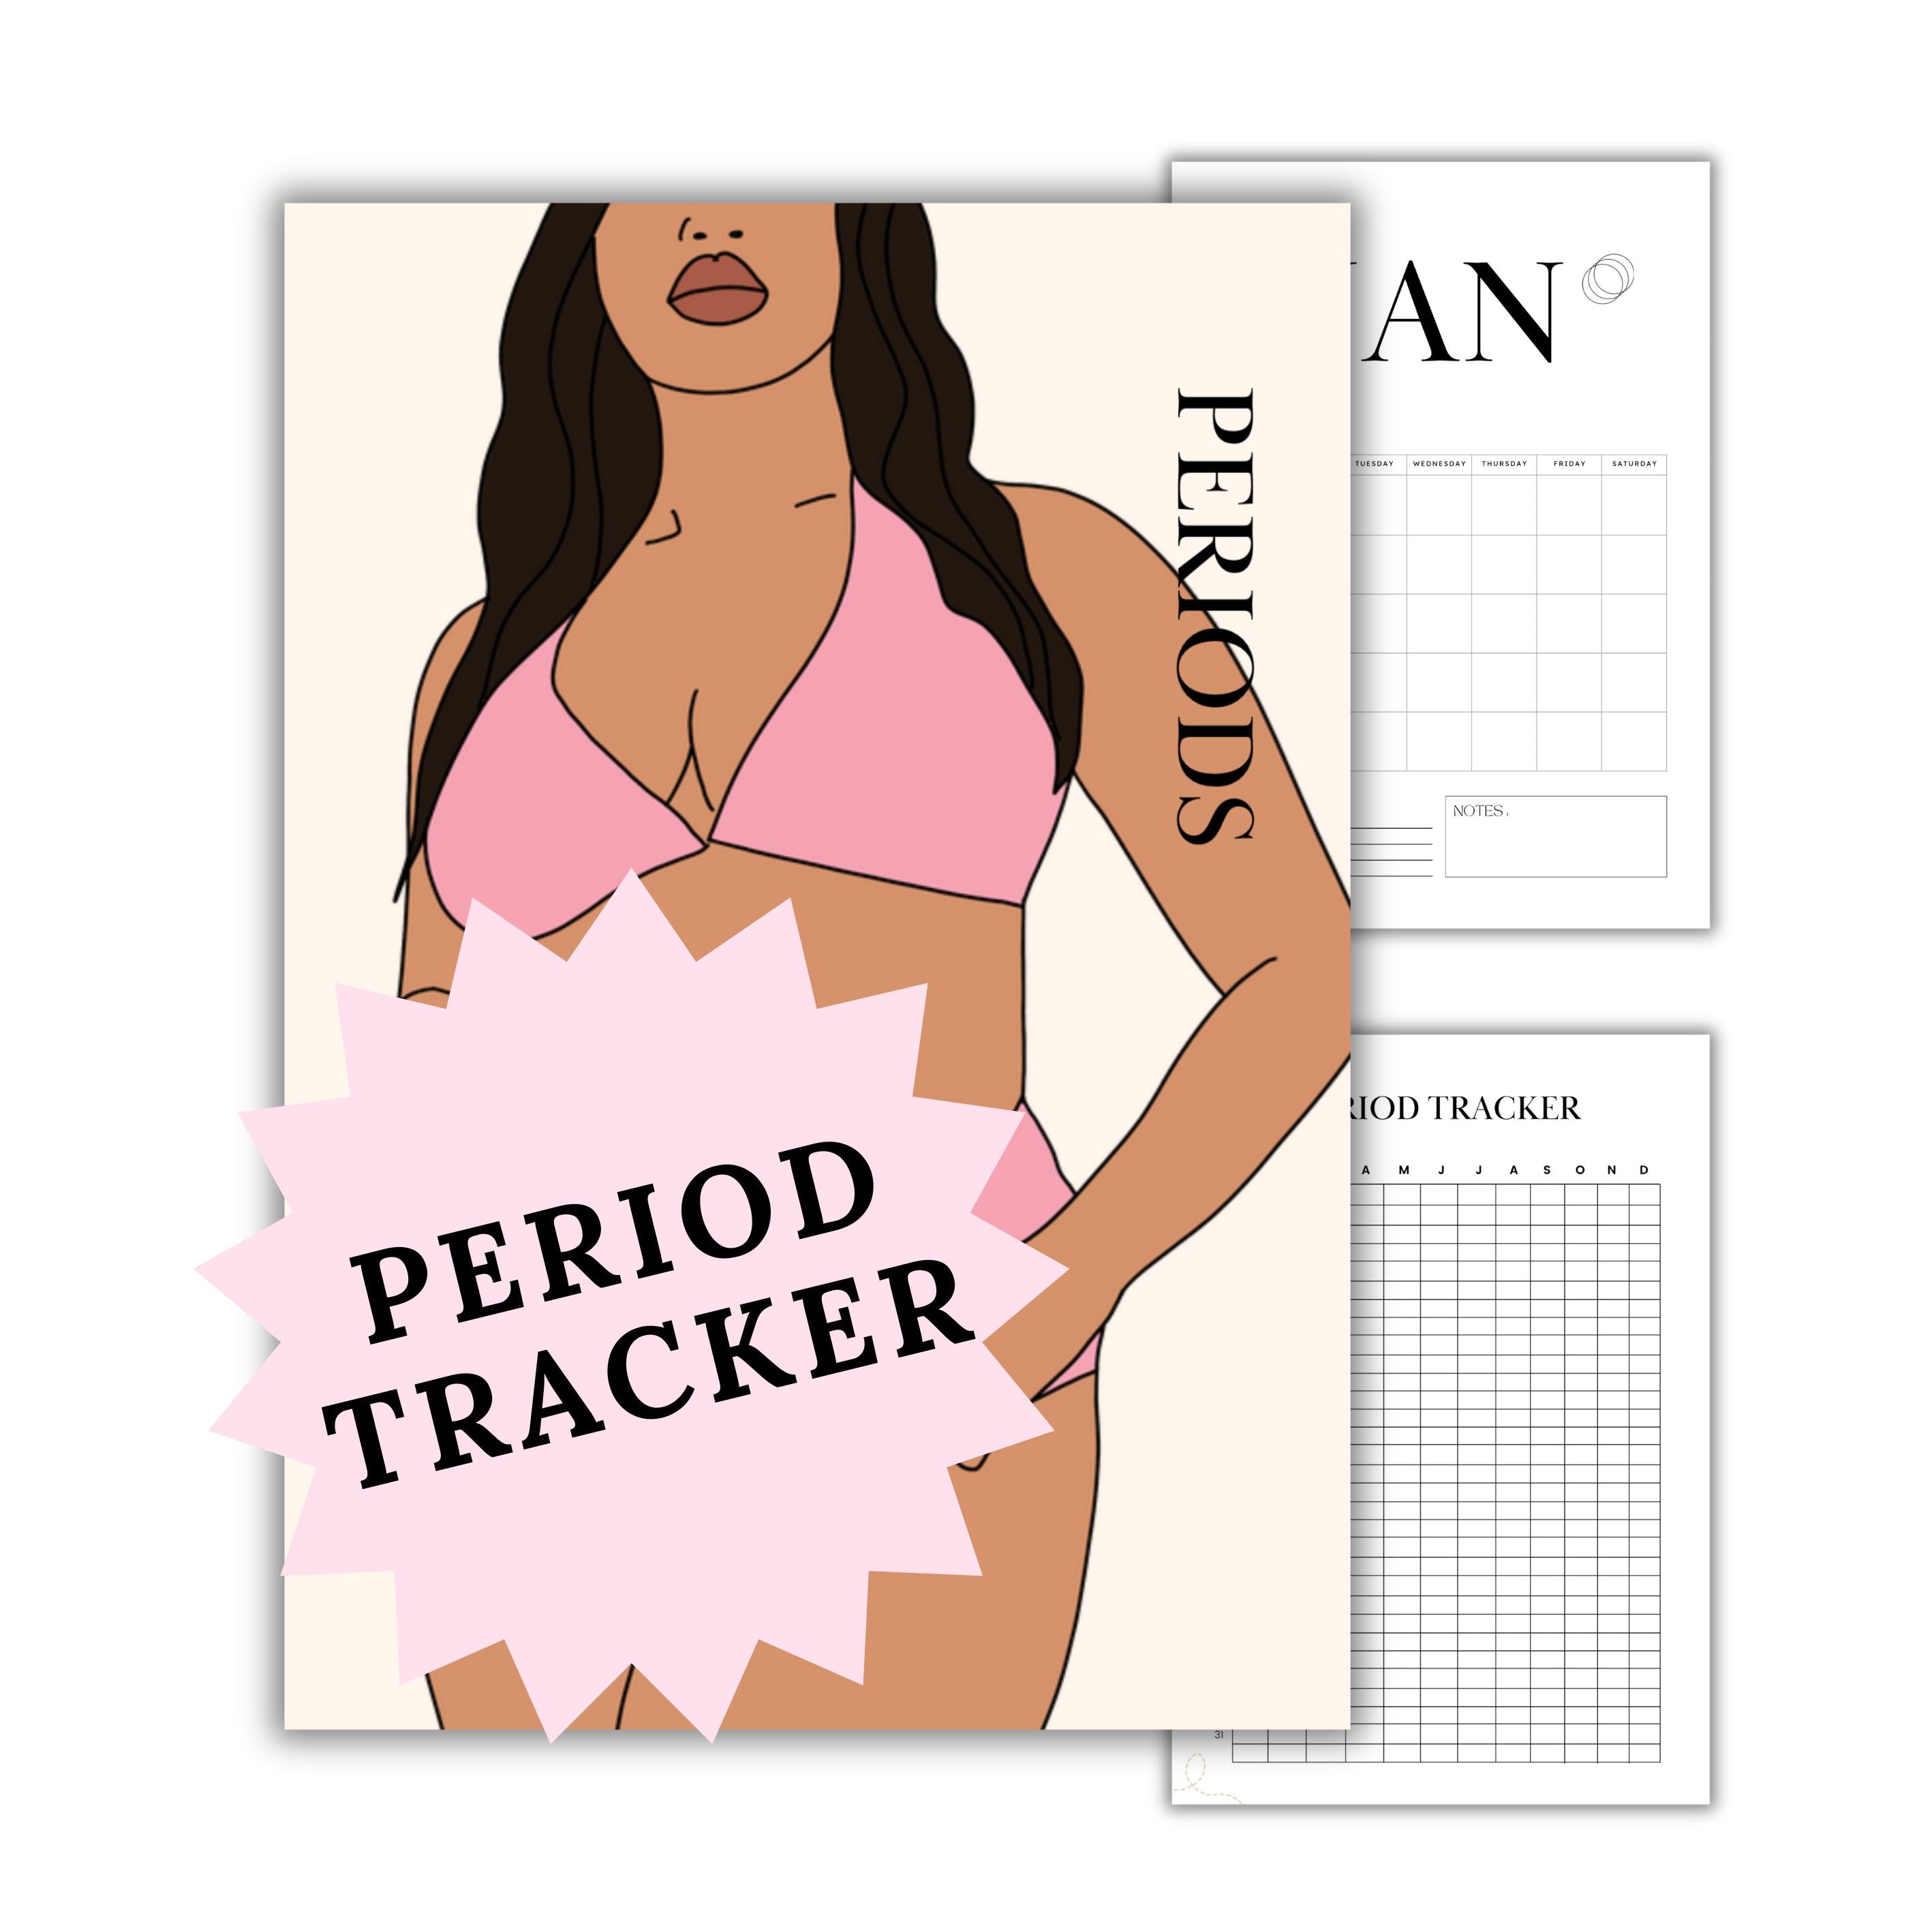 Period Tracker Workbook Digital Download